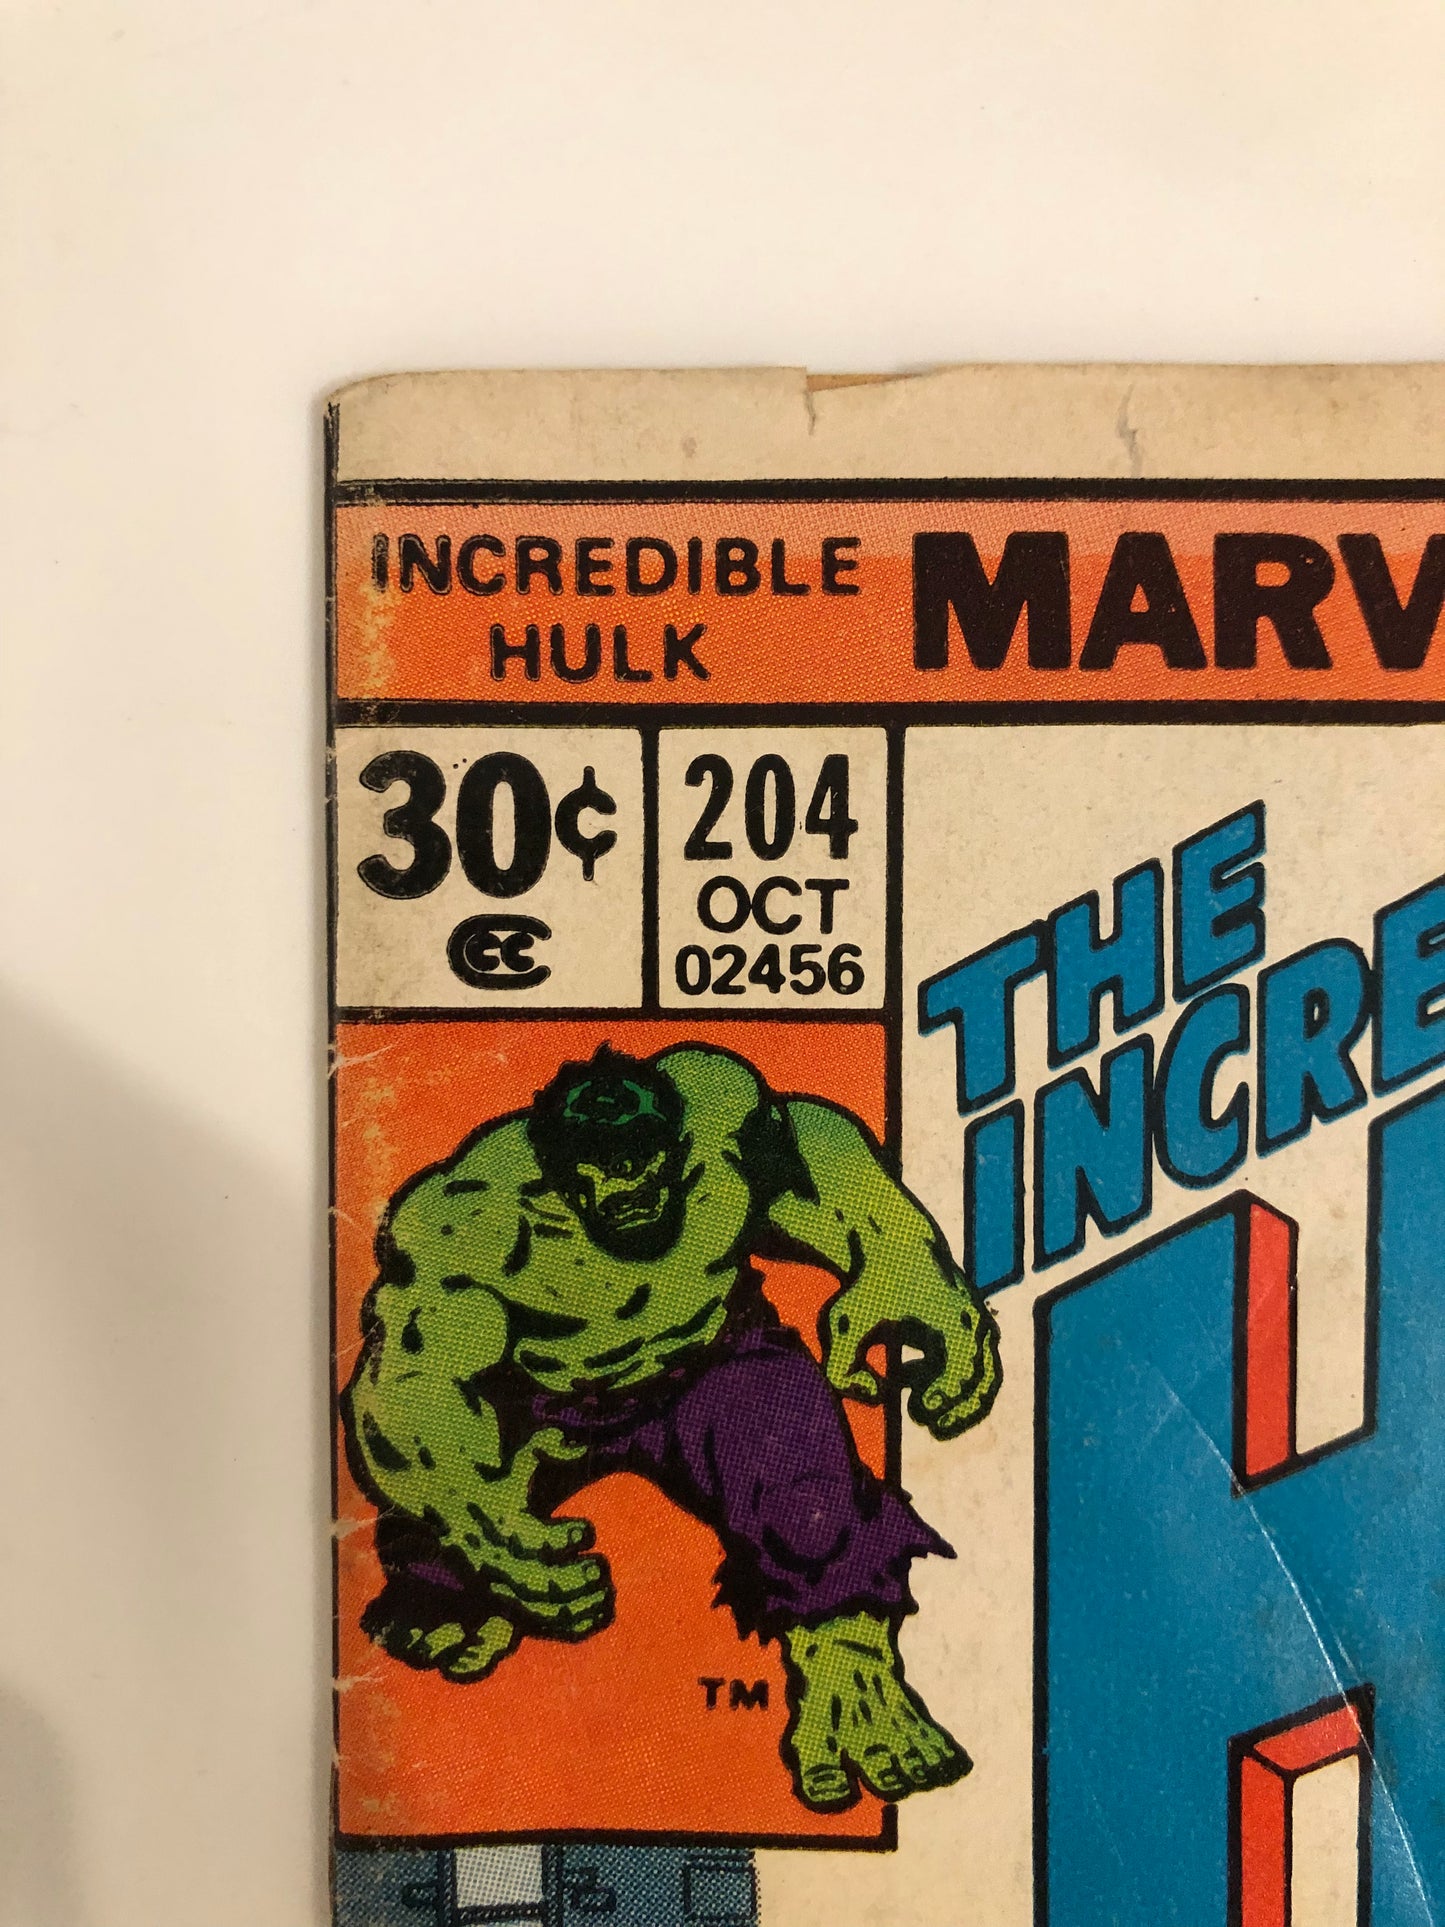 The Incredible Hulk #204